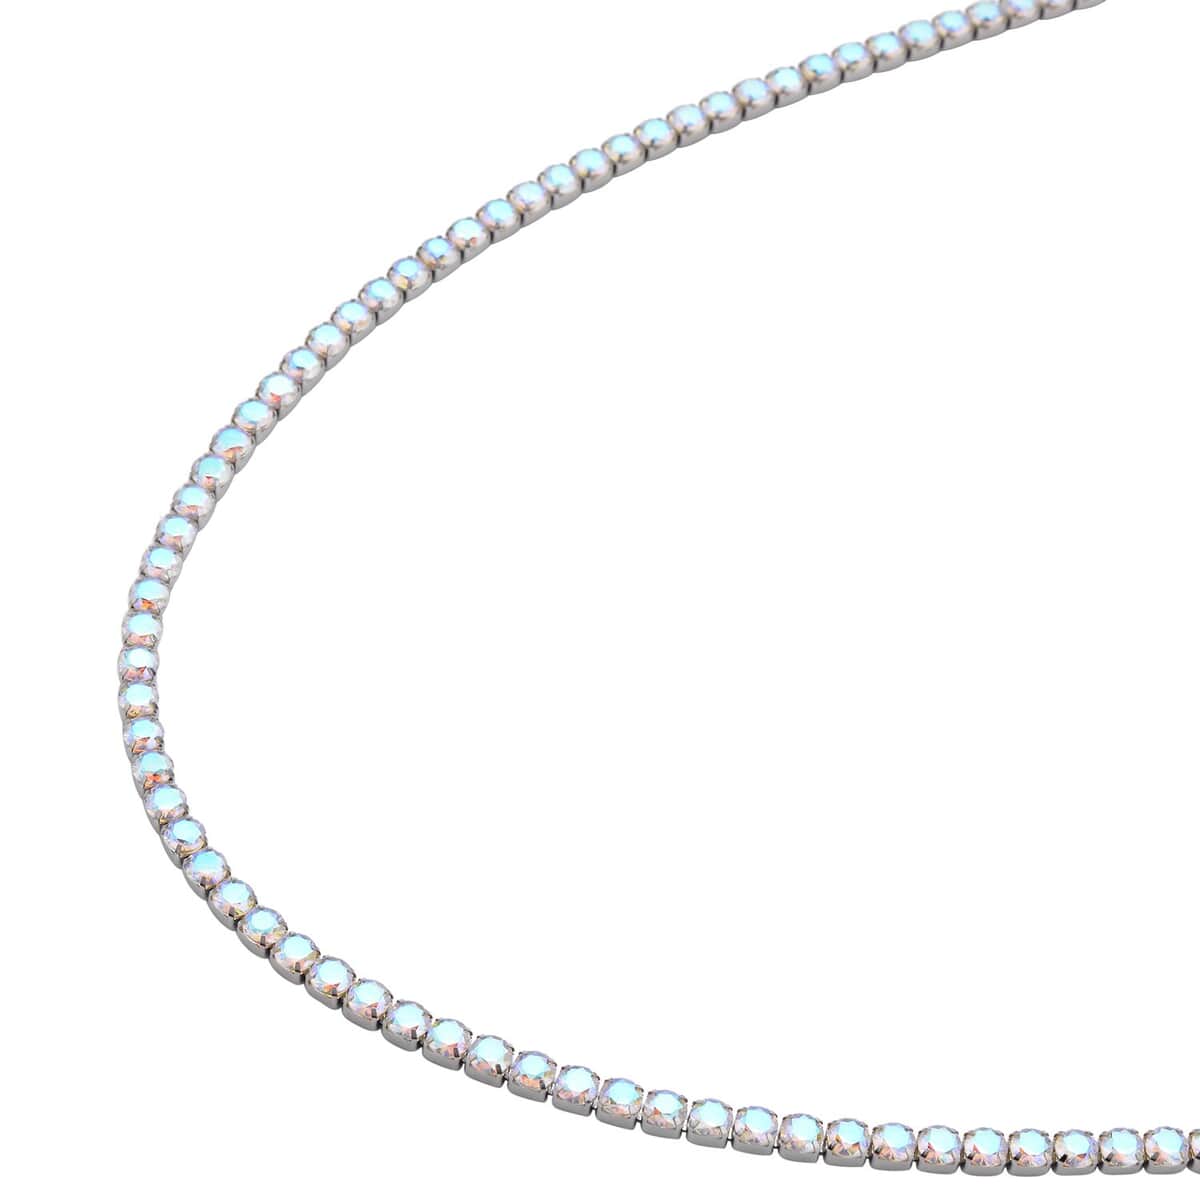 4.6 TCW Diamond Tennis Necklace White Gold, 21 Inches